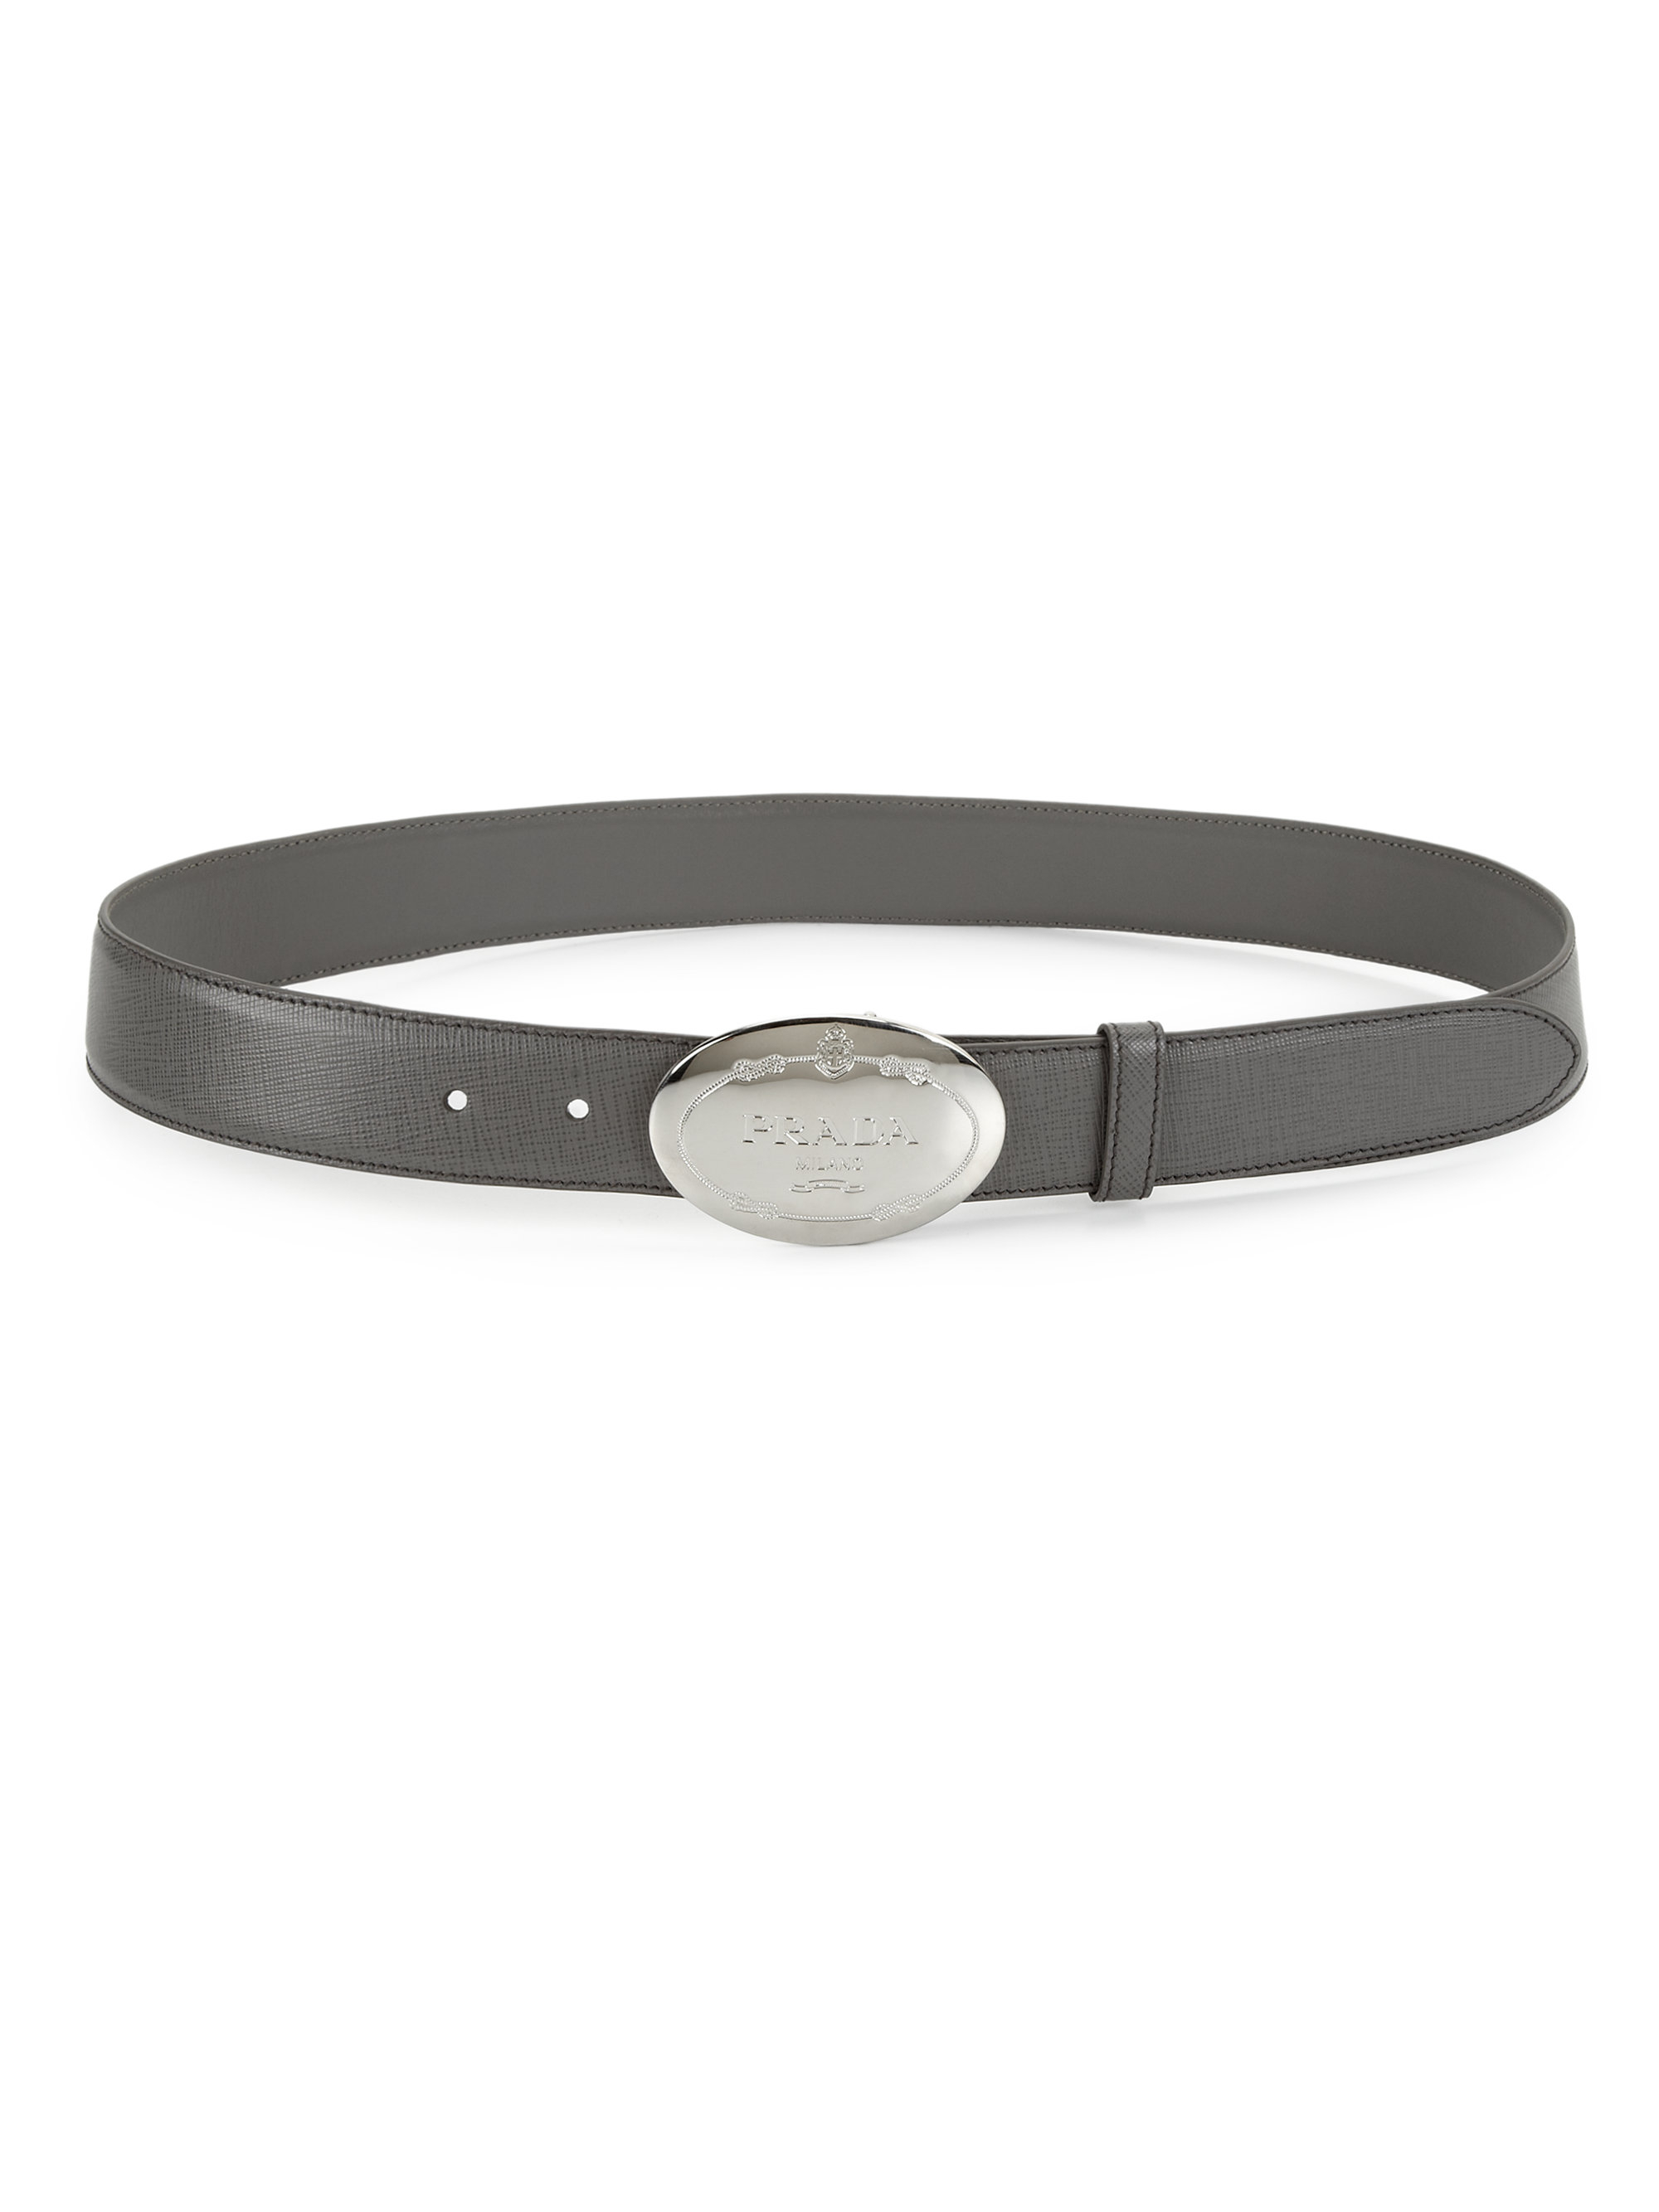 Prada Cinture Leather Belt in Gray (GREY) | Lyst  